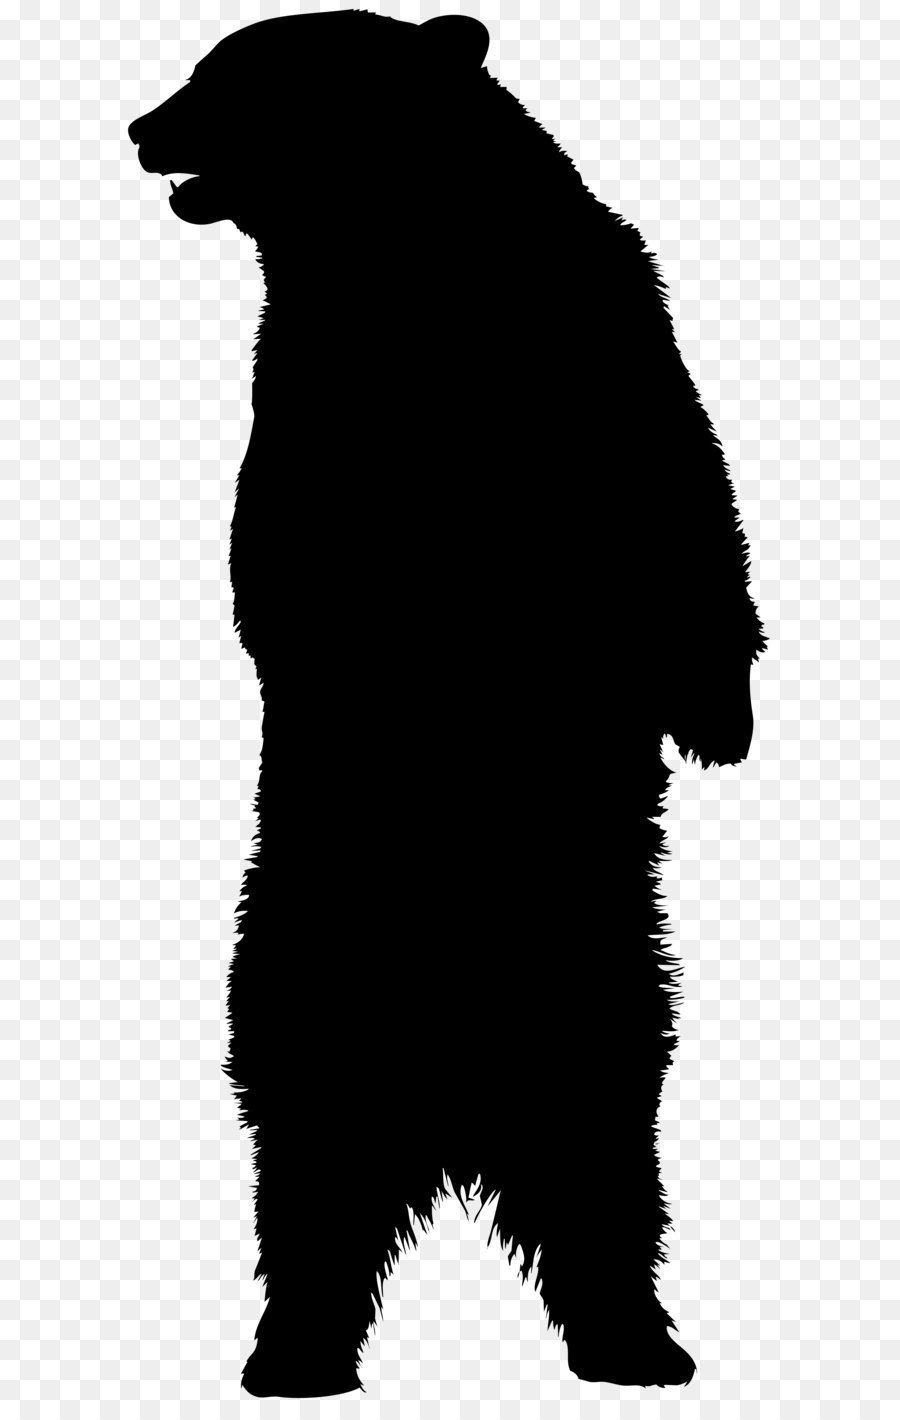 American black bear Brown bear Silhouette - Bear Silhouette PNG Clip Art Image png download - 3697*8000 - Free Transparent Bear png Download.